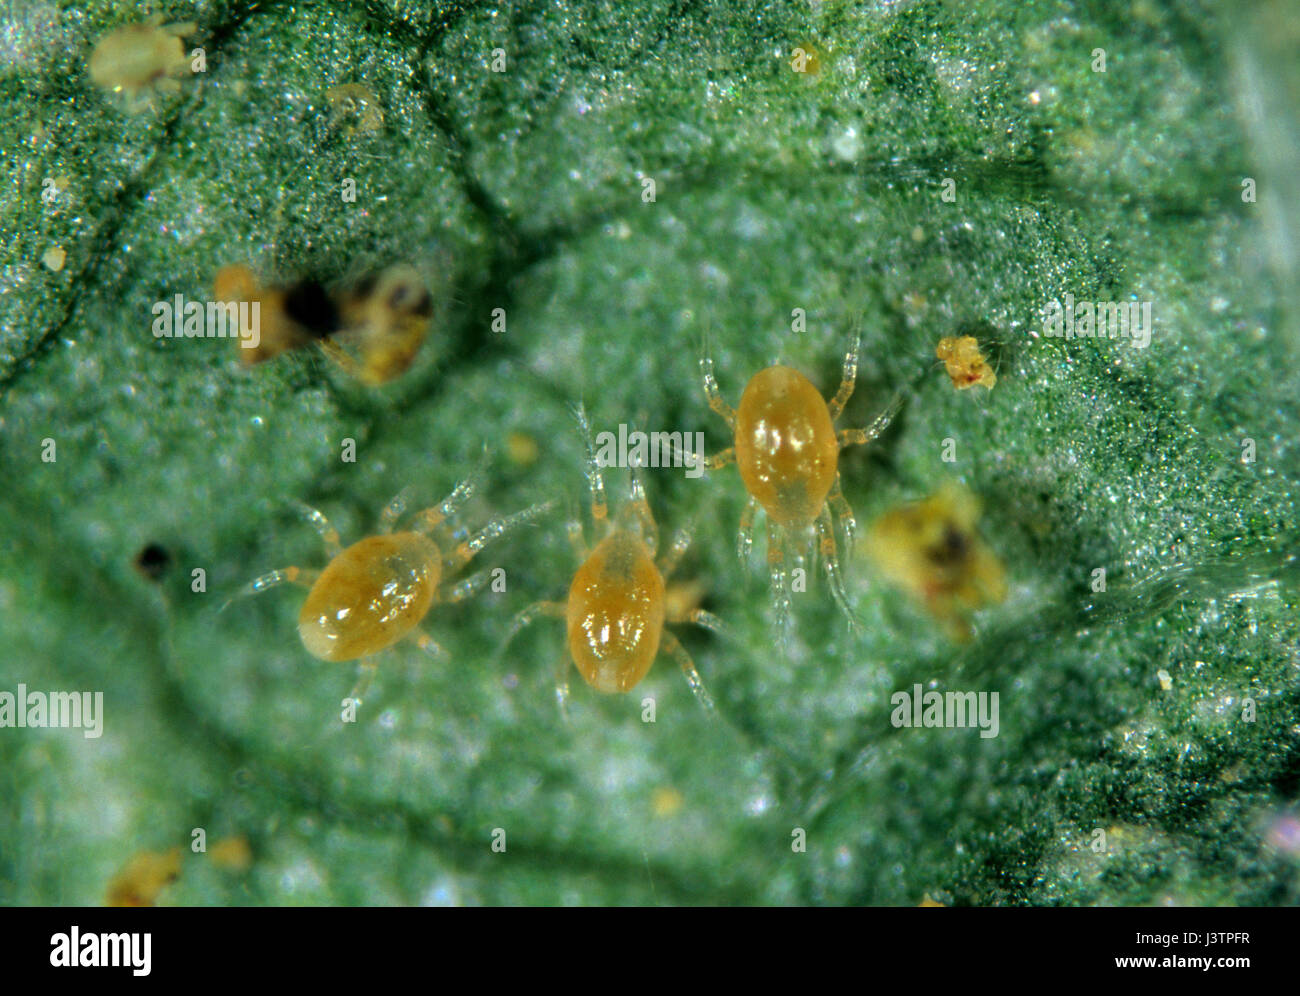 Predatory mites (Phytoseiulus persimilis) on a leaf with prey mites Stock Photo